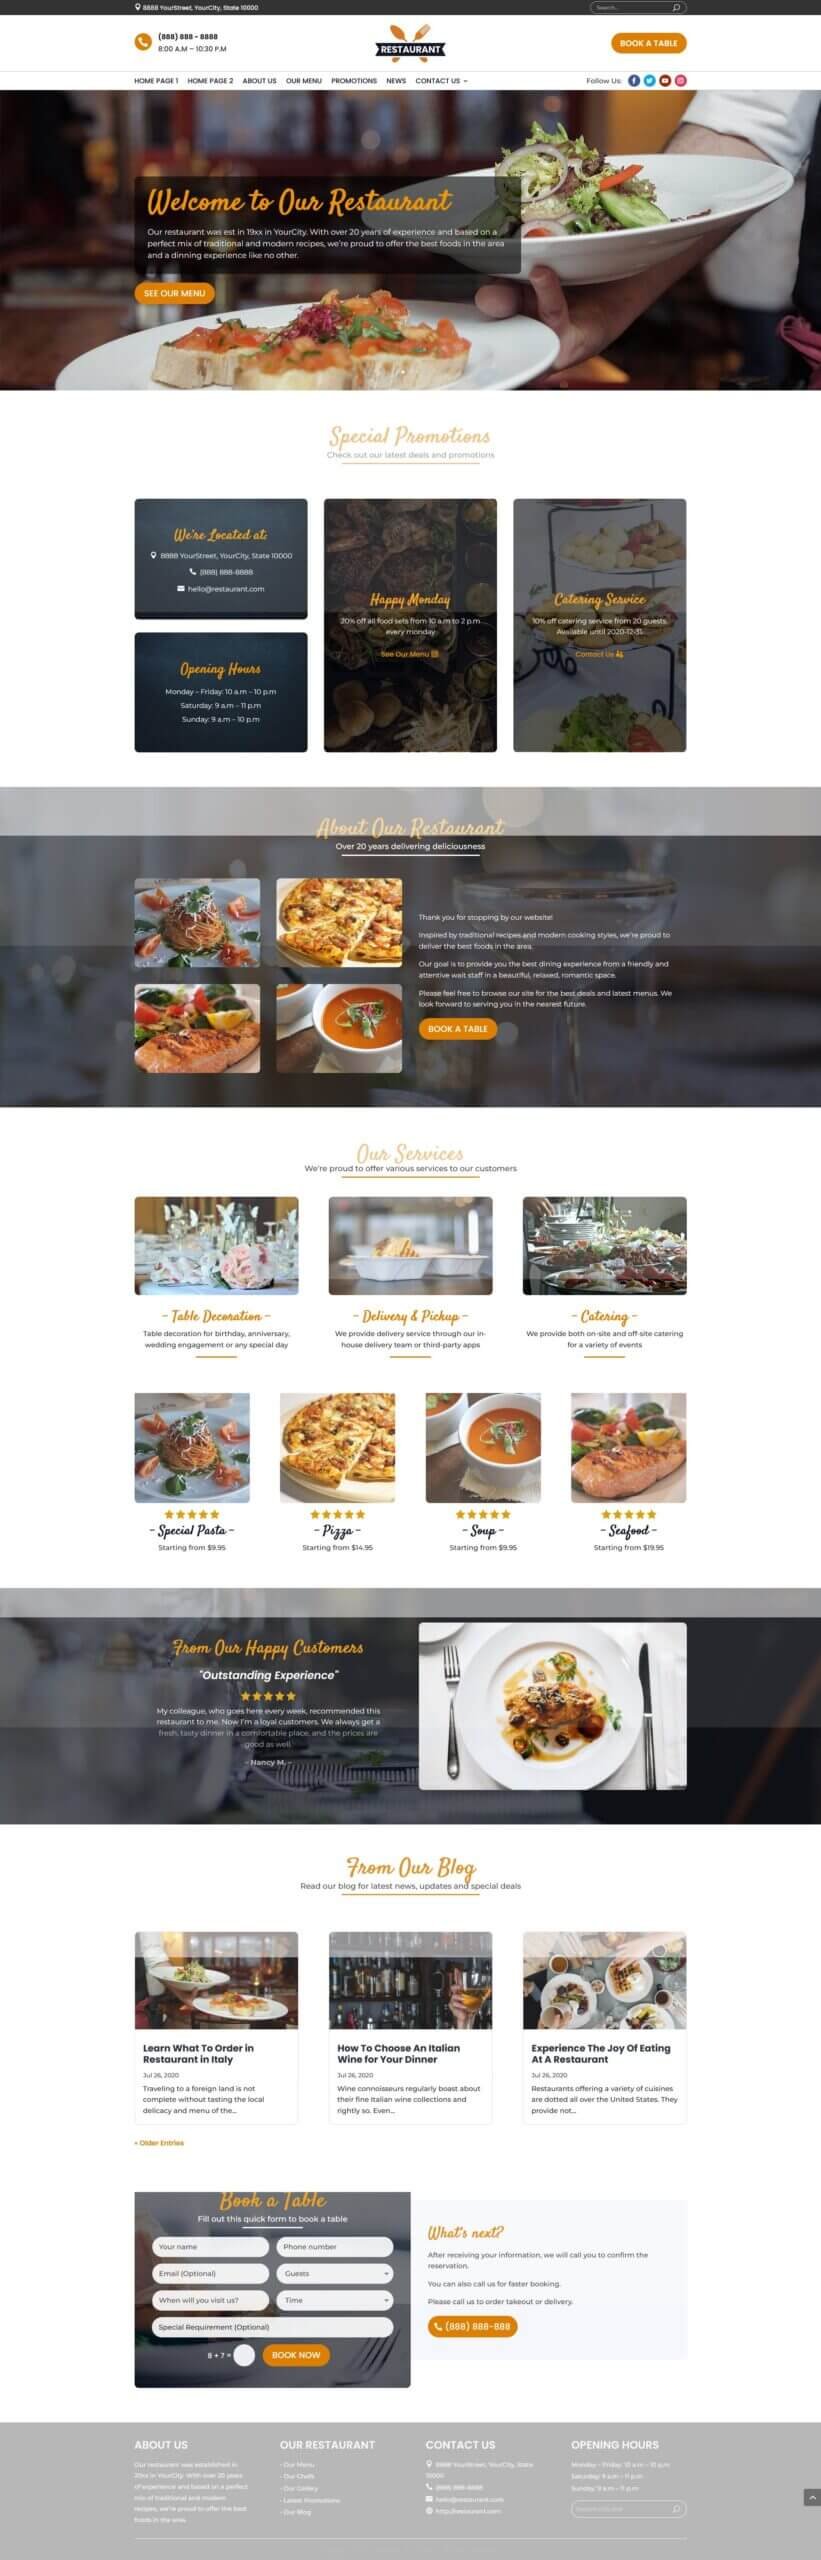 Gold Coast Local Business Websites - Restaurants